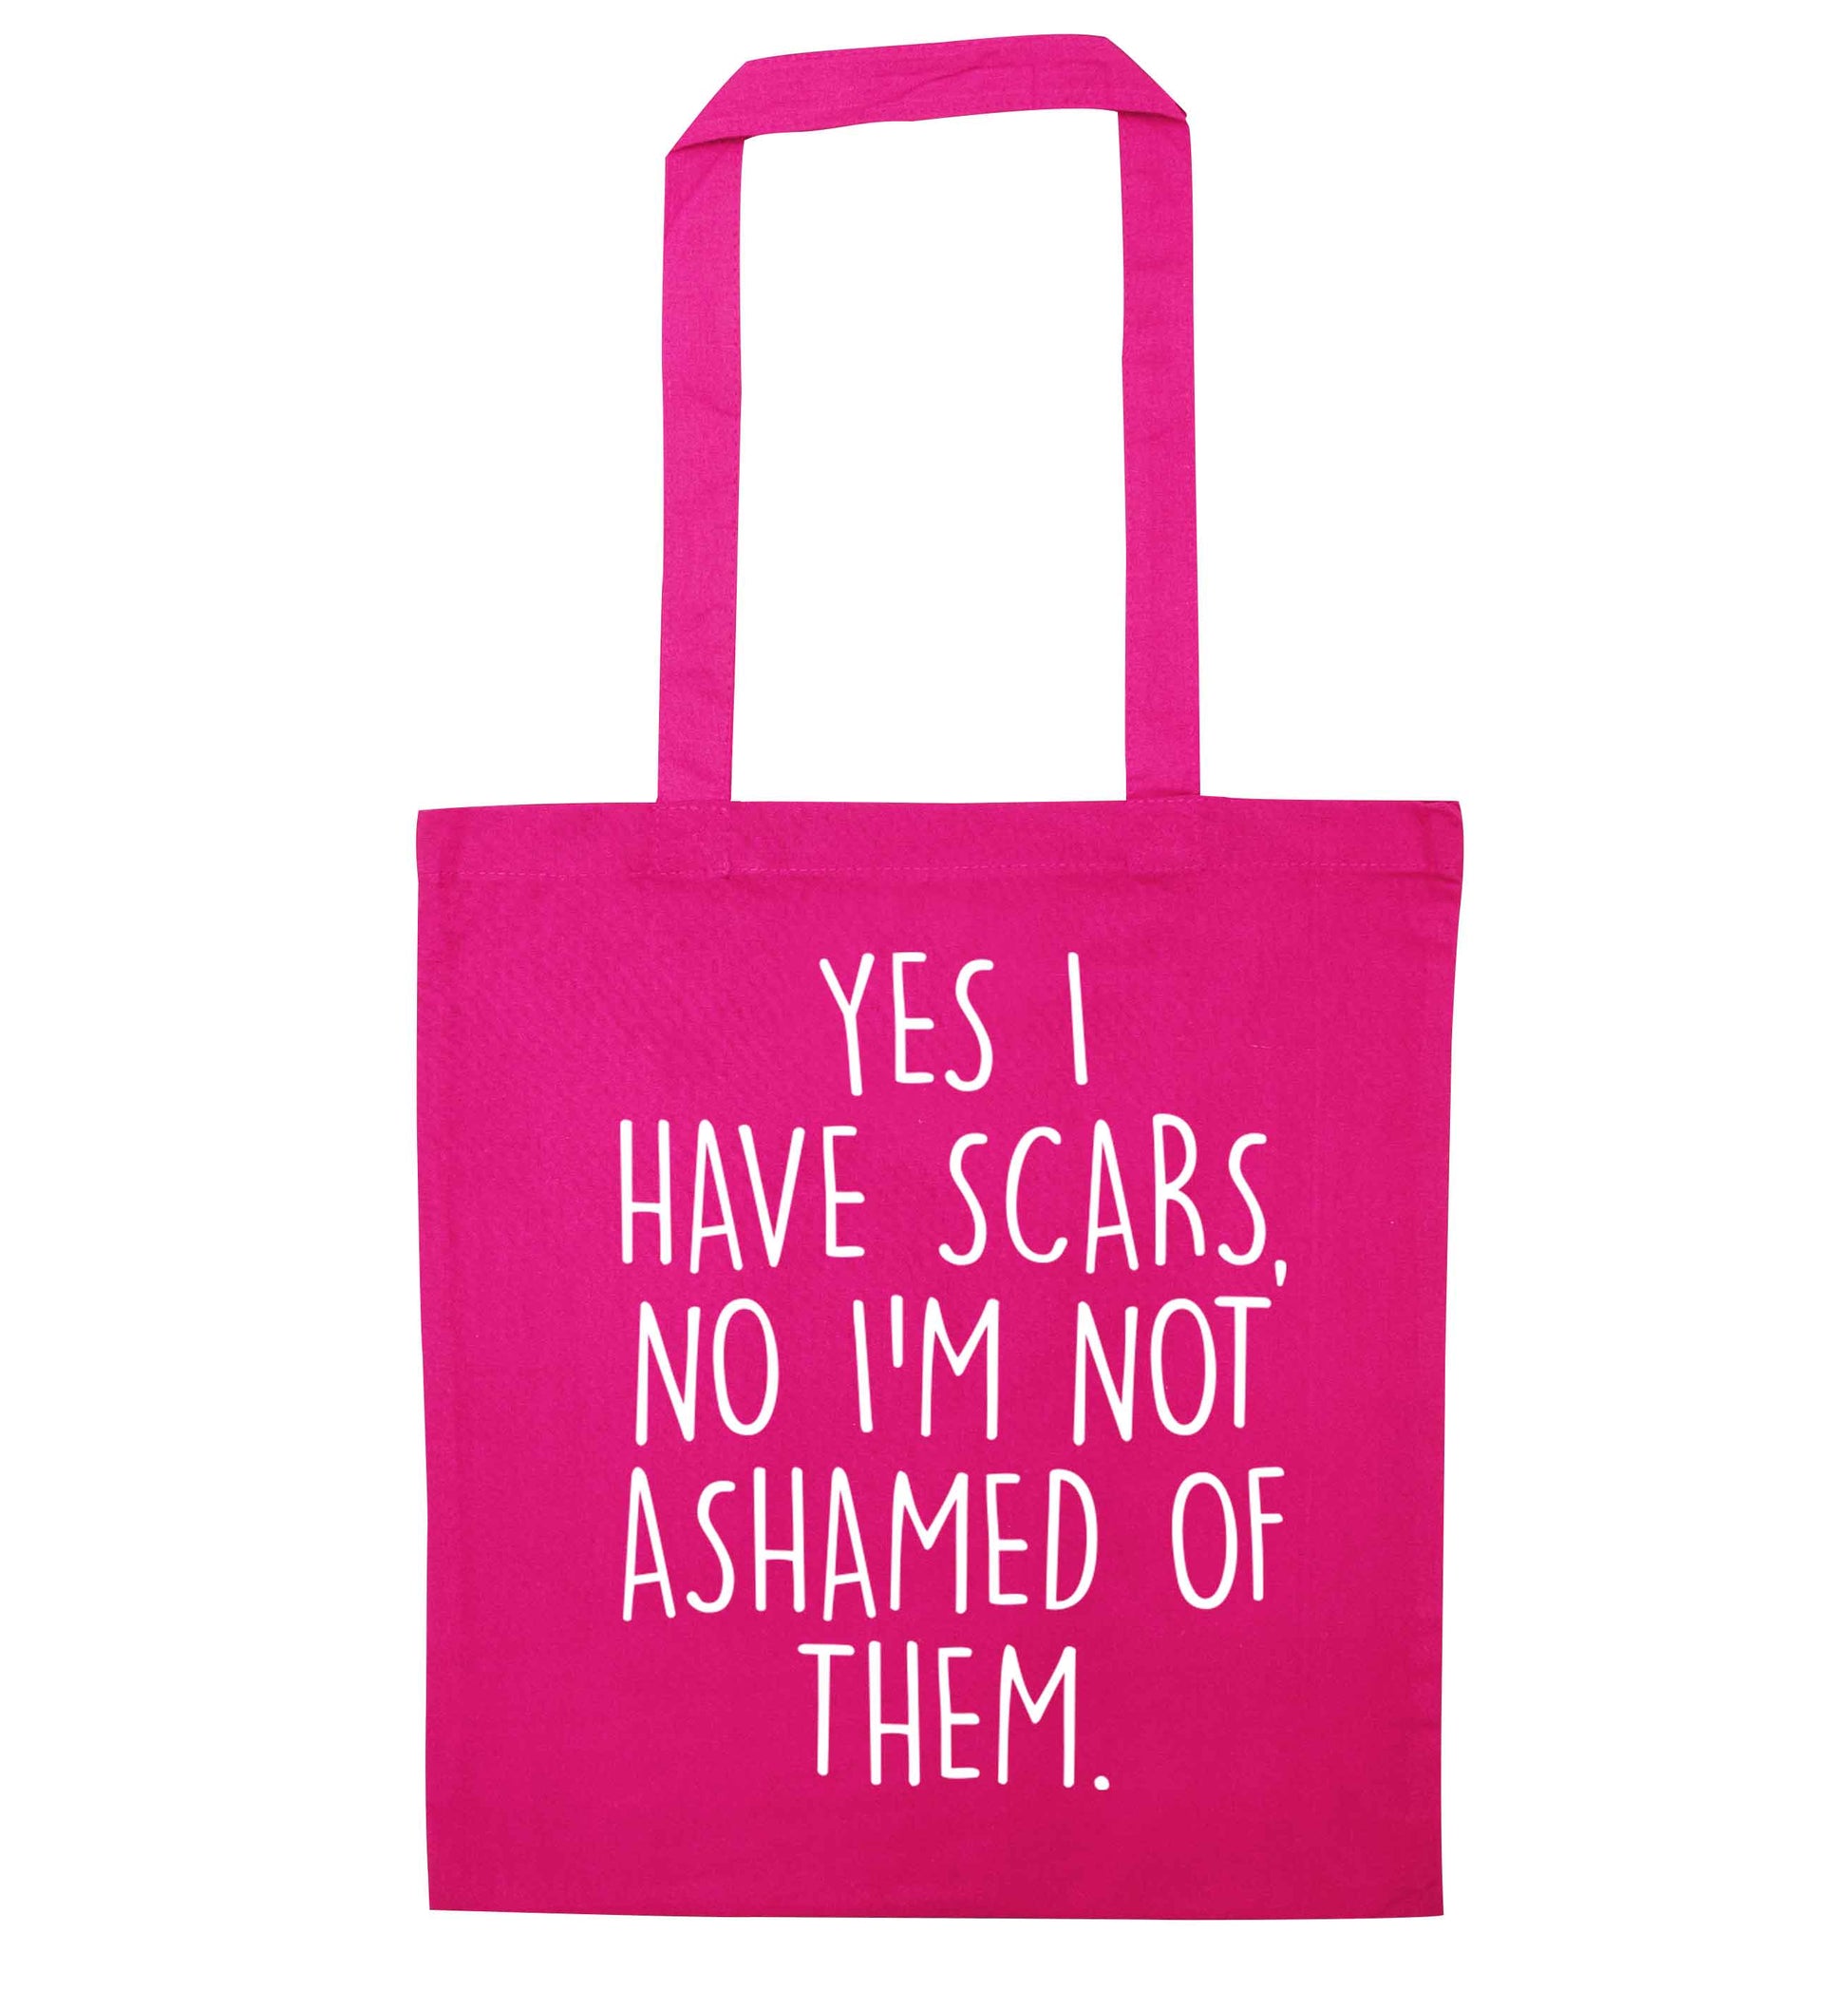 Yes I have scars, no I'm not ashamed of them pink tote bag